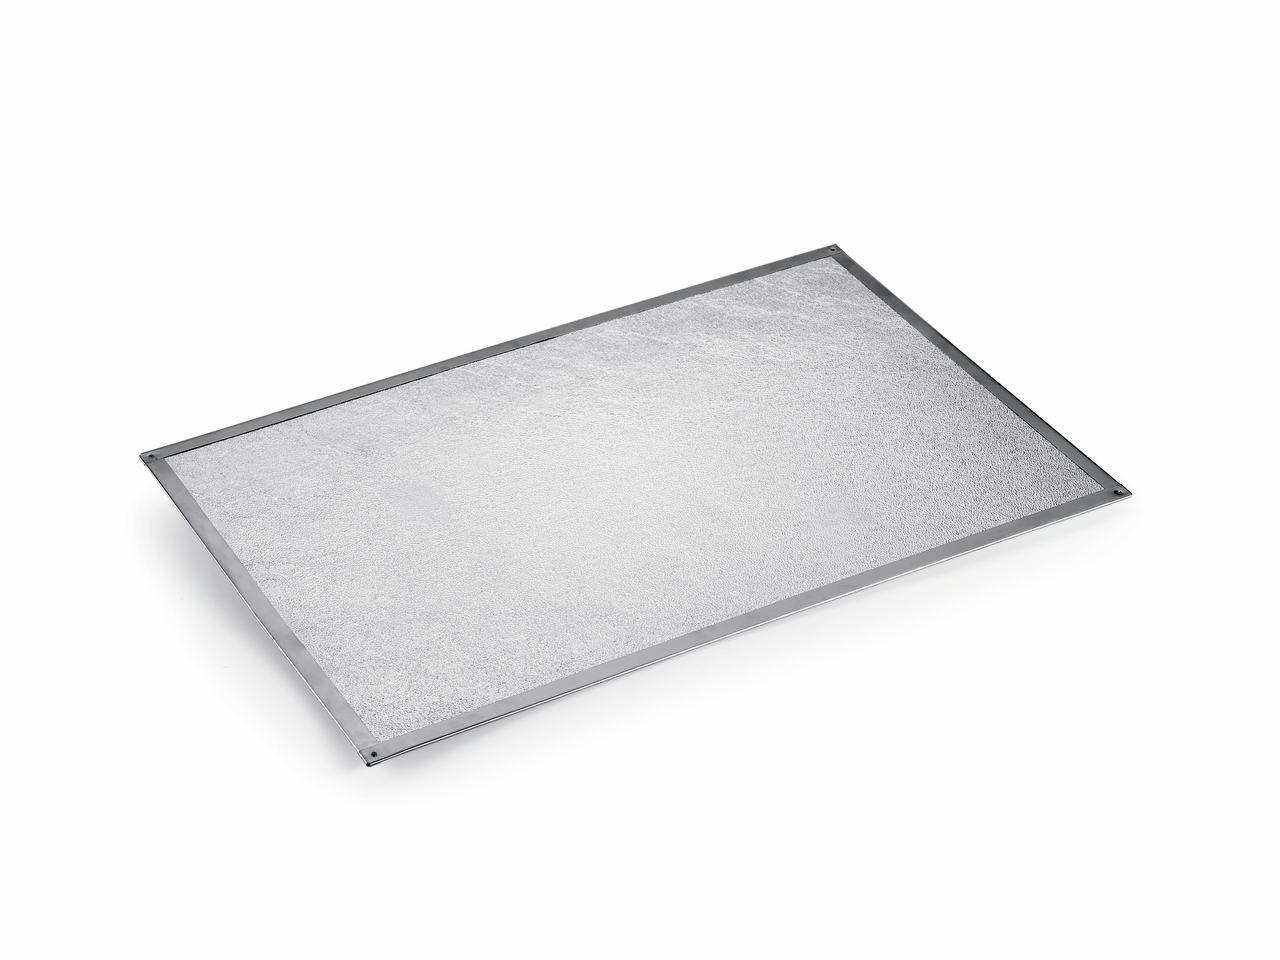  Heat protection plates, aluminium